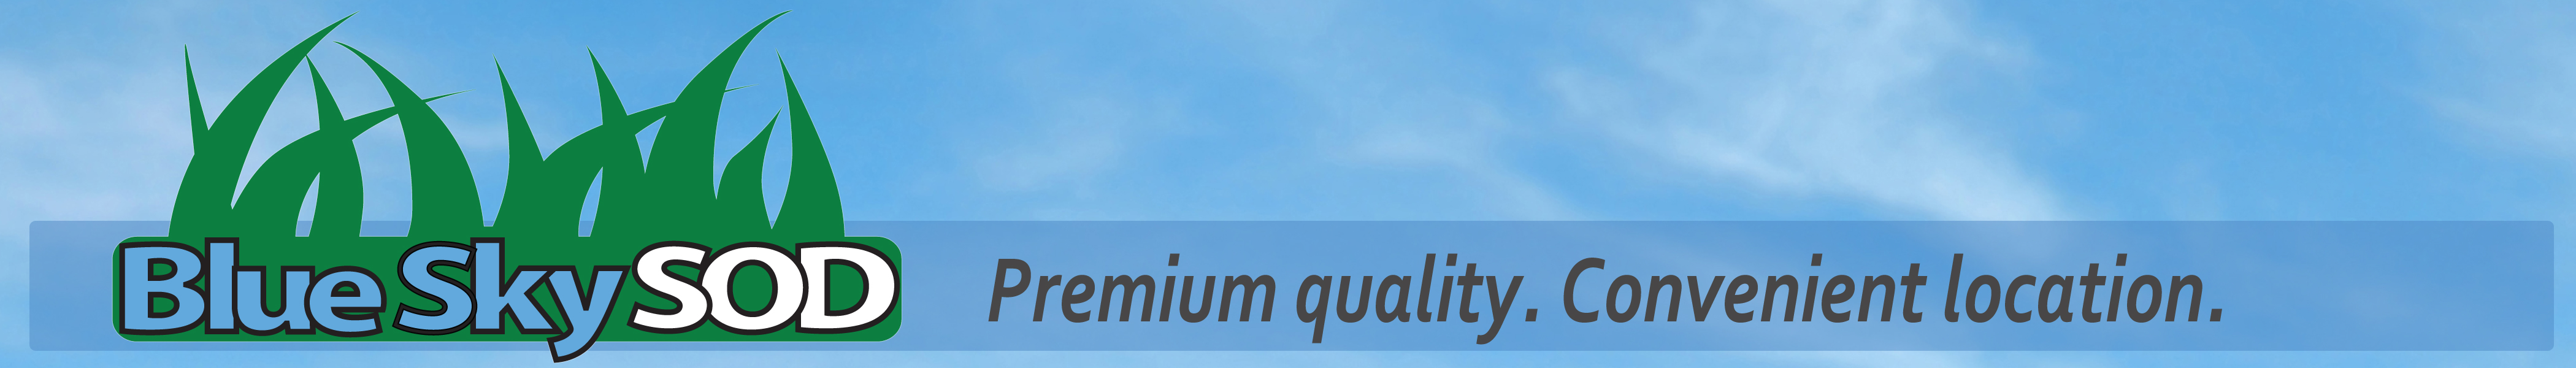 Blue Sky Sod - Premium Quality. Convenient Location.